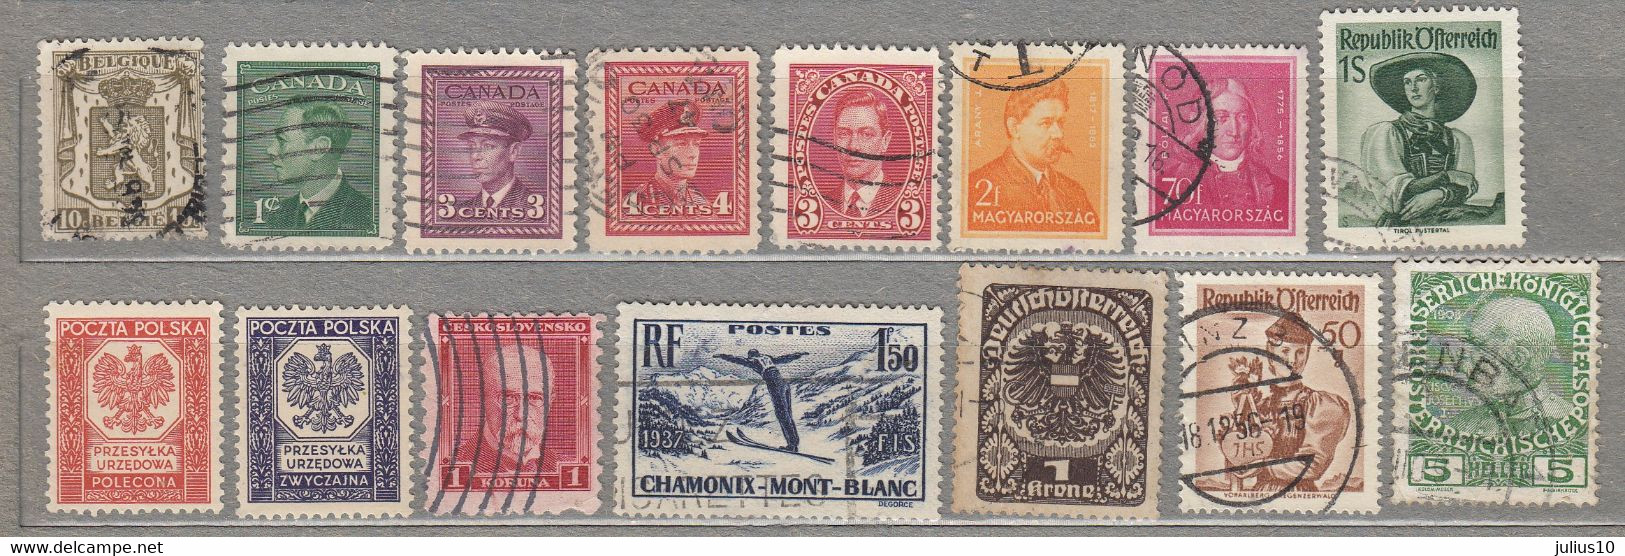 World Monde Welt  Old Stamps Lot 3 Scans #25132 - Lots & Kiloware (mixtures) - Max. 999 Stamps